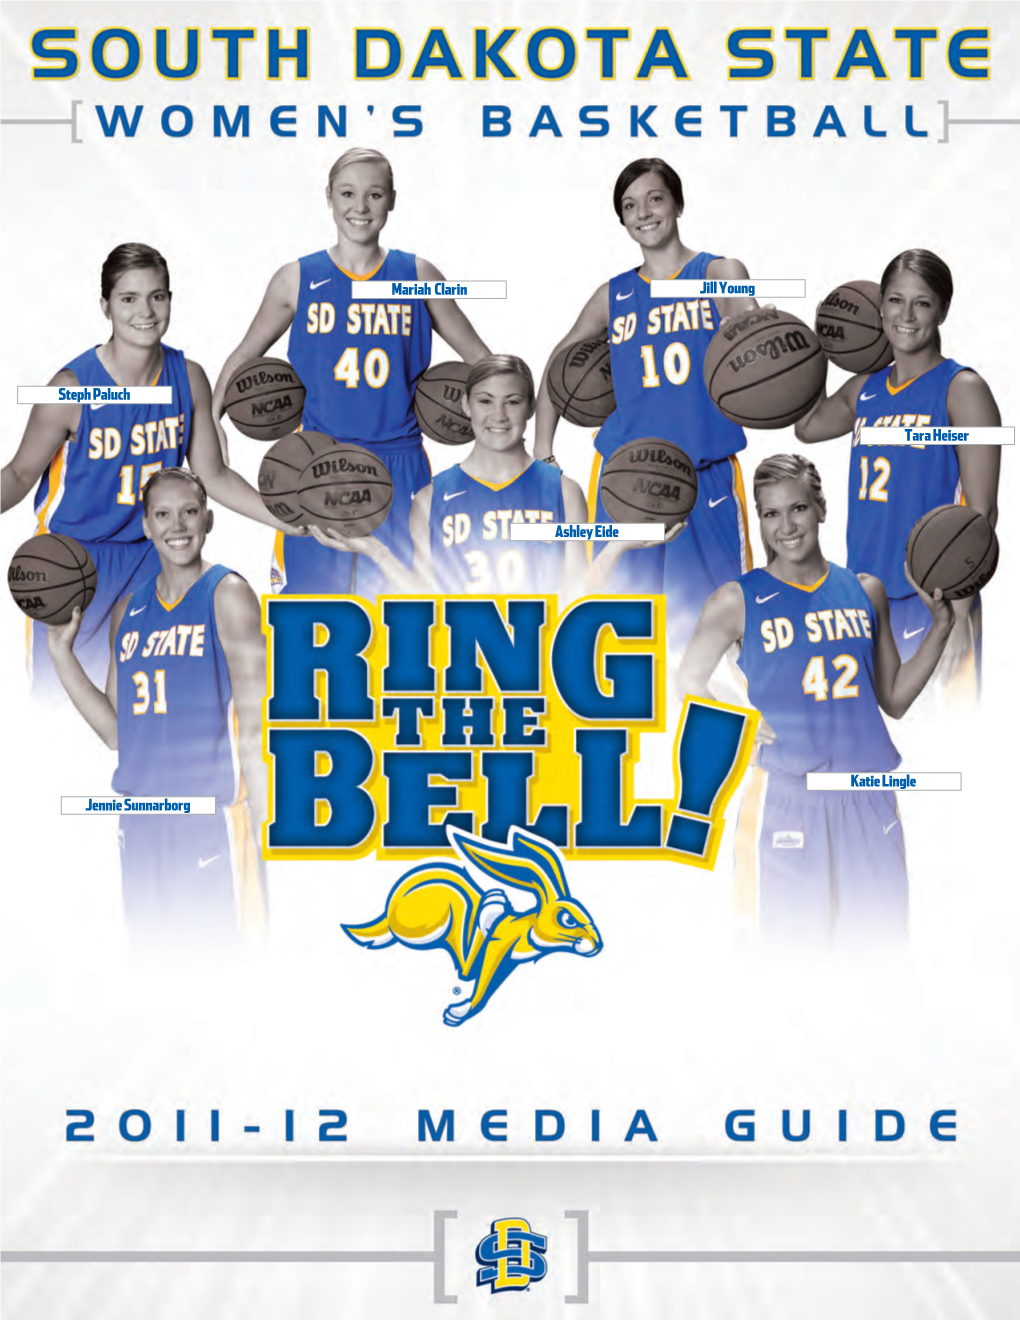 South Dakota State Women's Basketball 2011-12 Media Guide